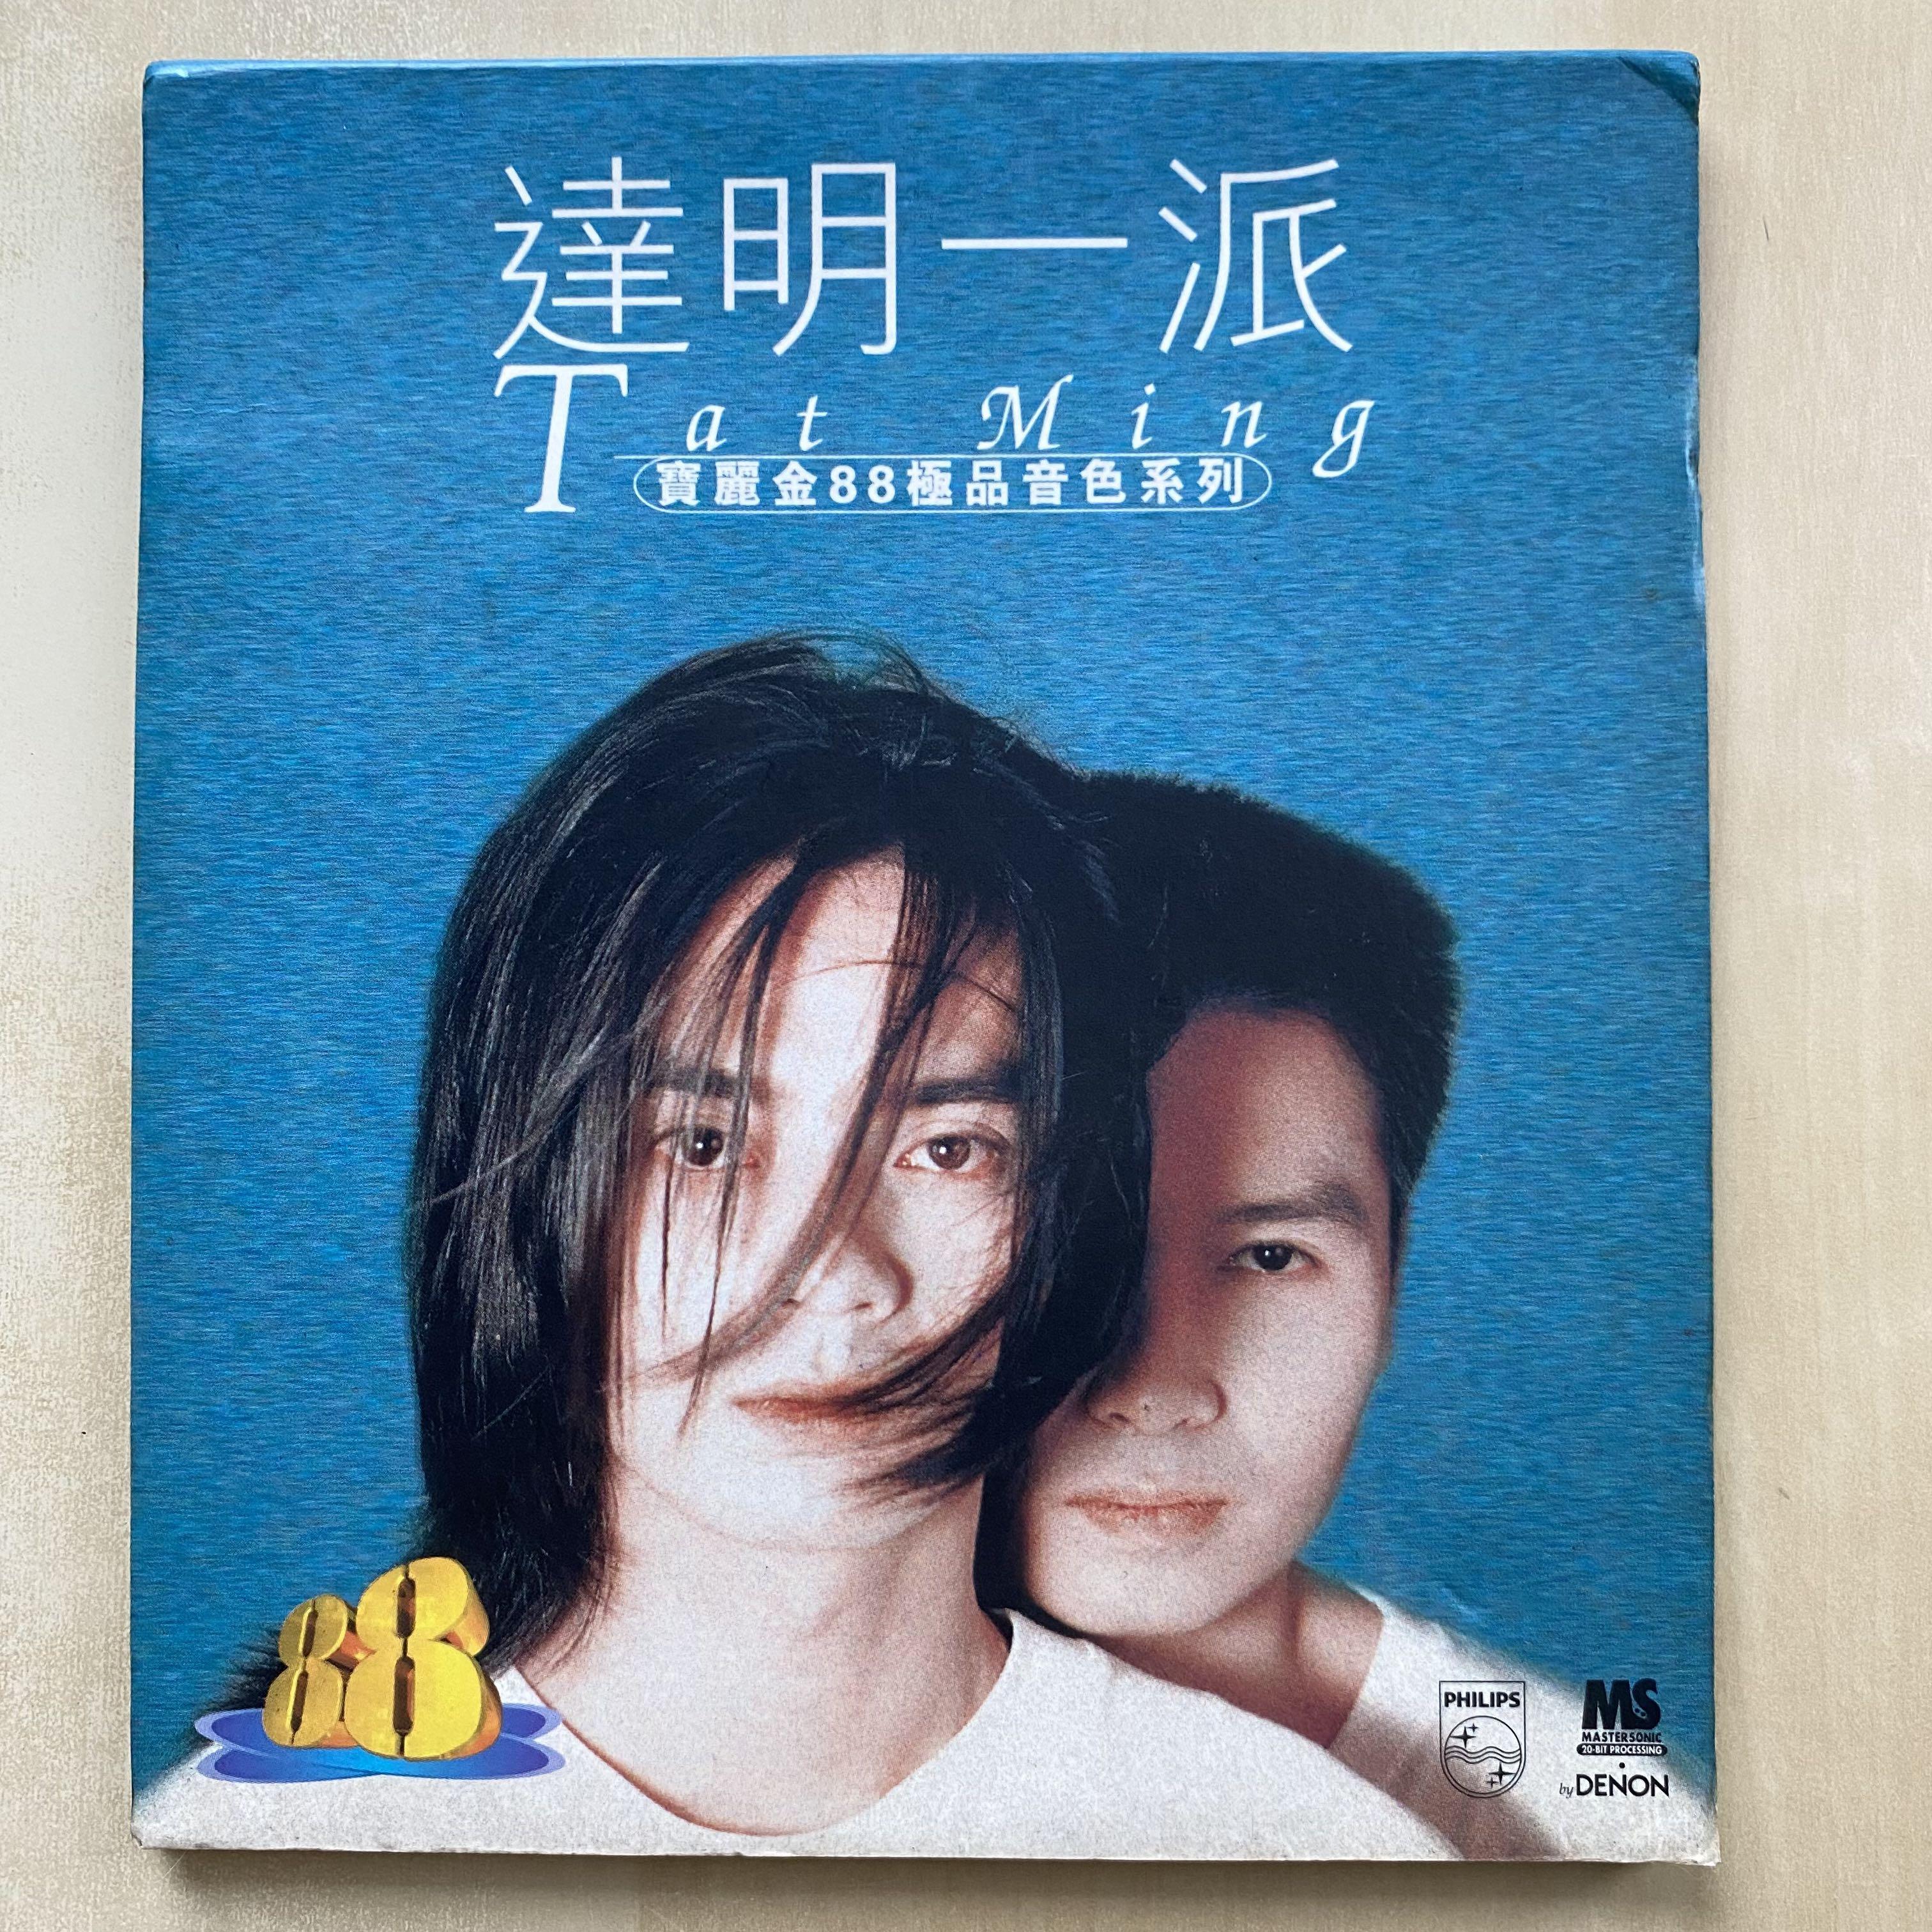 CD丨寶麗金88極品音色系列達明一派/ PolyGram 88 Collection Tat Ming 